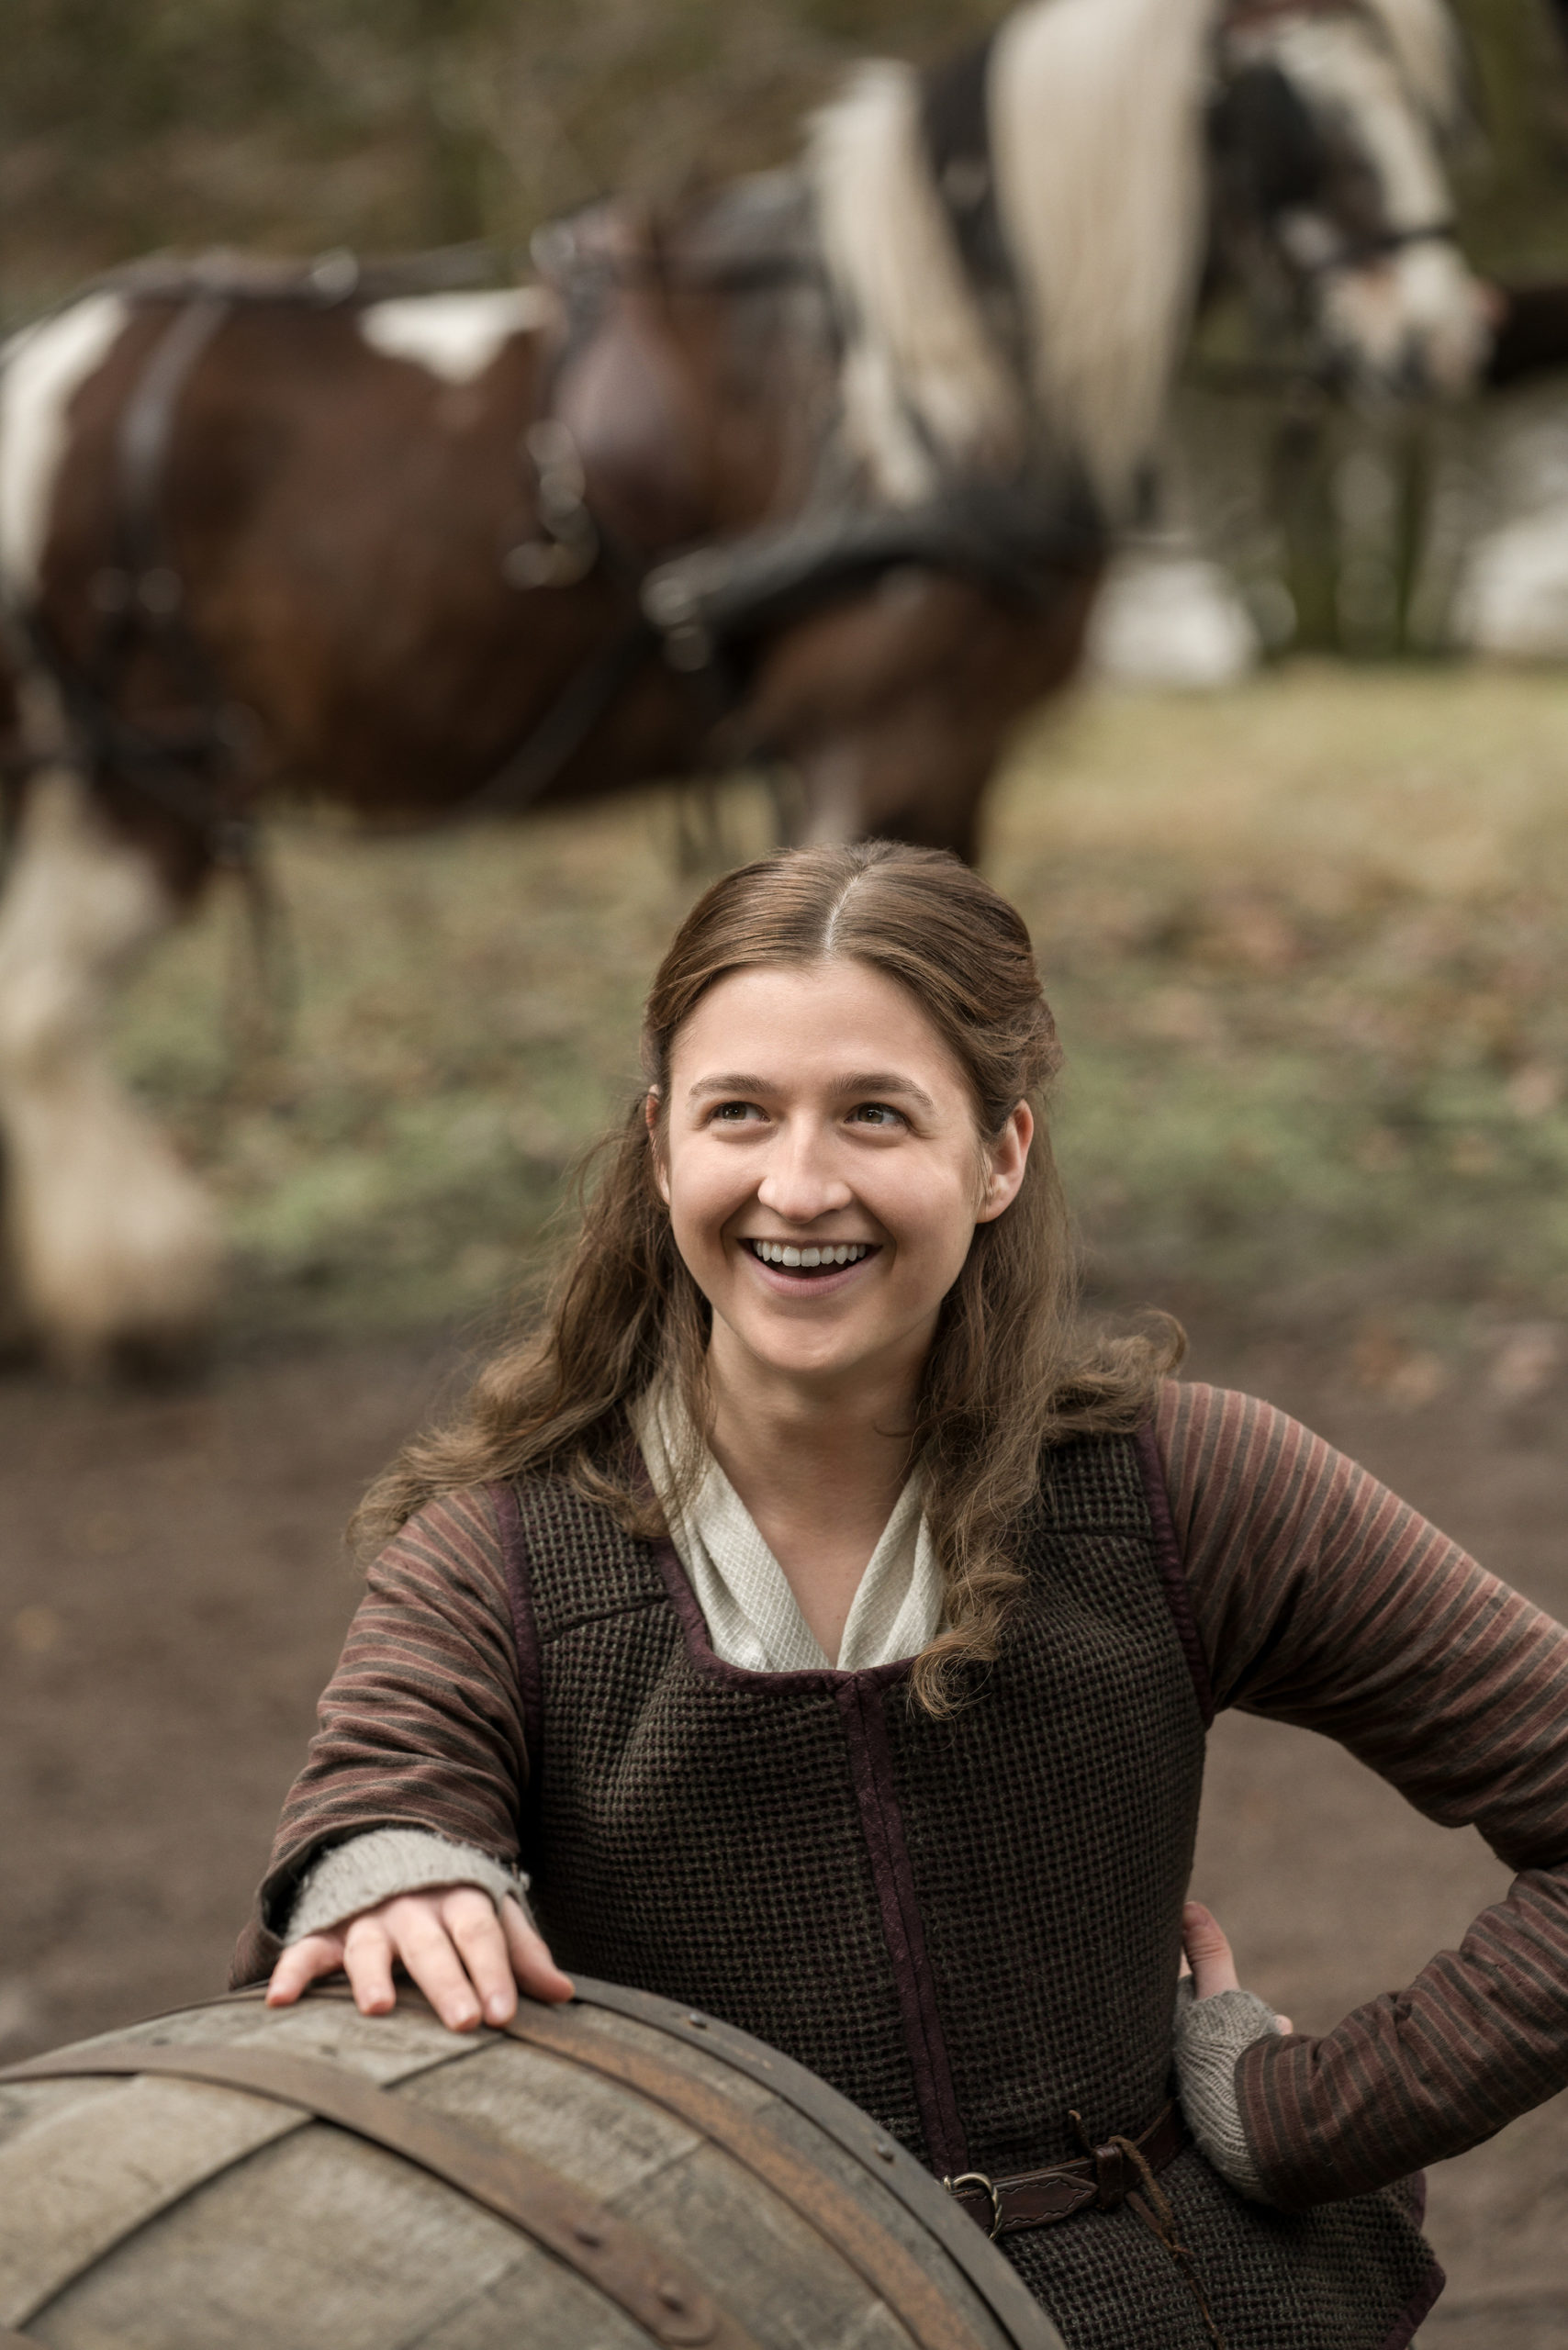 Outlander Season 6 - Caitlin O'Ryan has a little laugh between scenes in her Lizzy look.